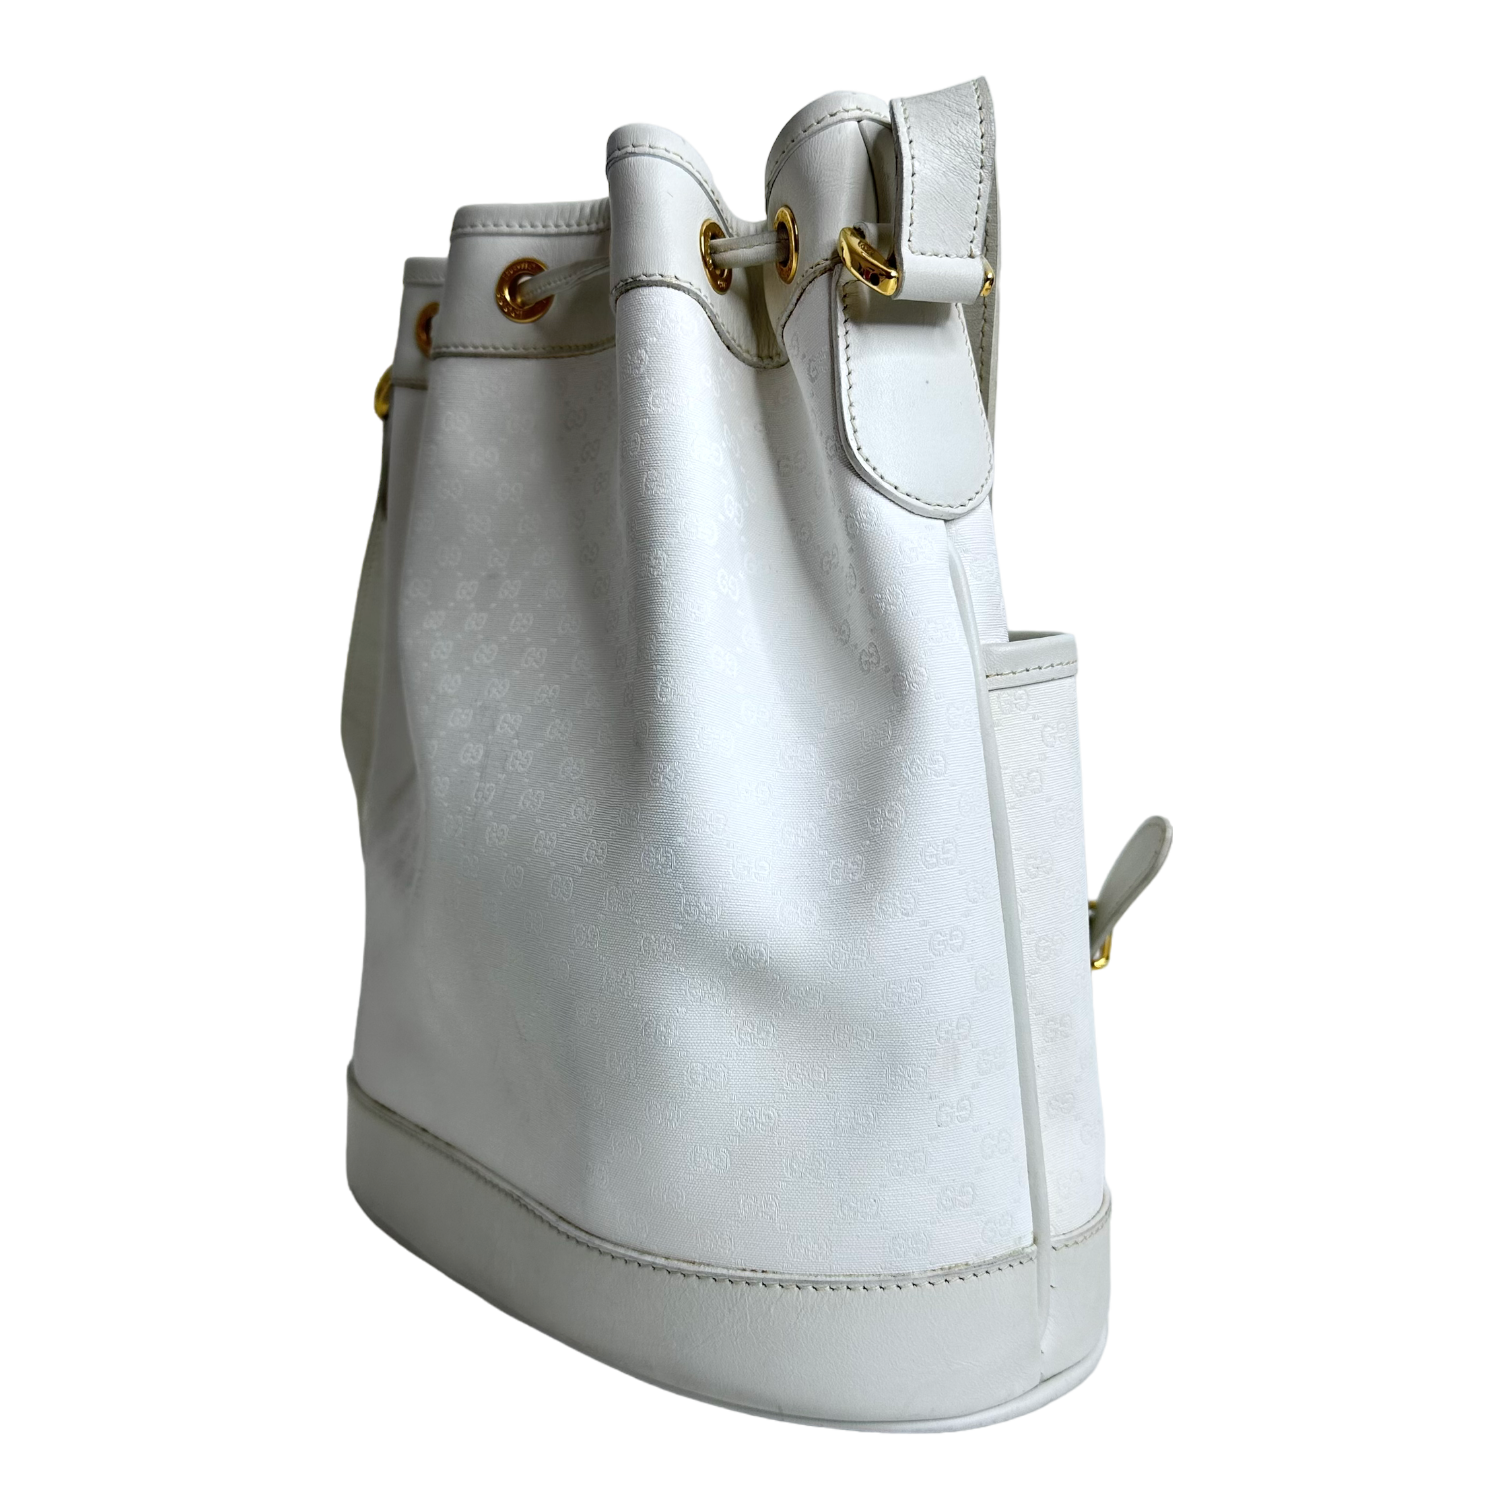 Vintage White Bucket Bag